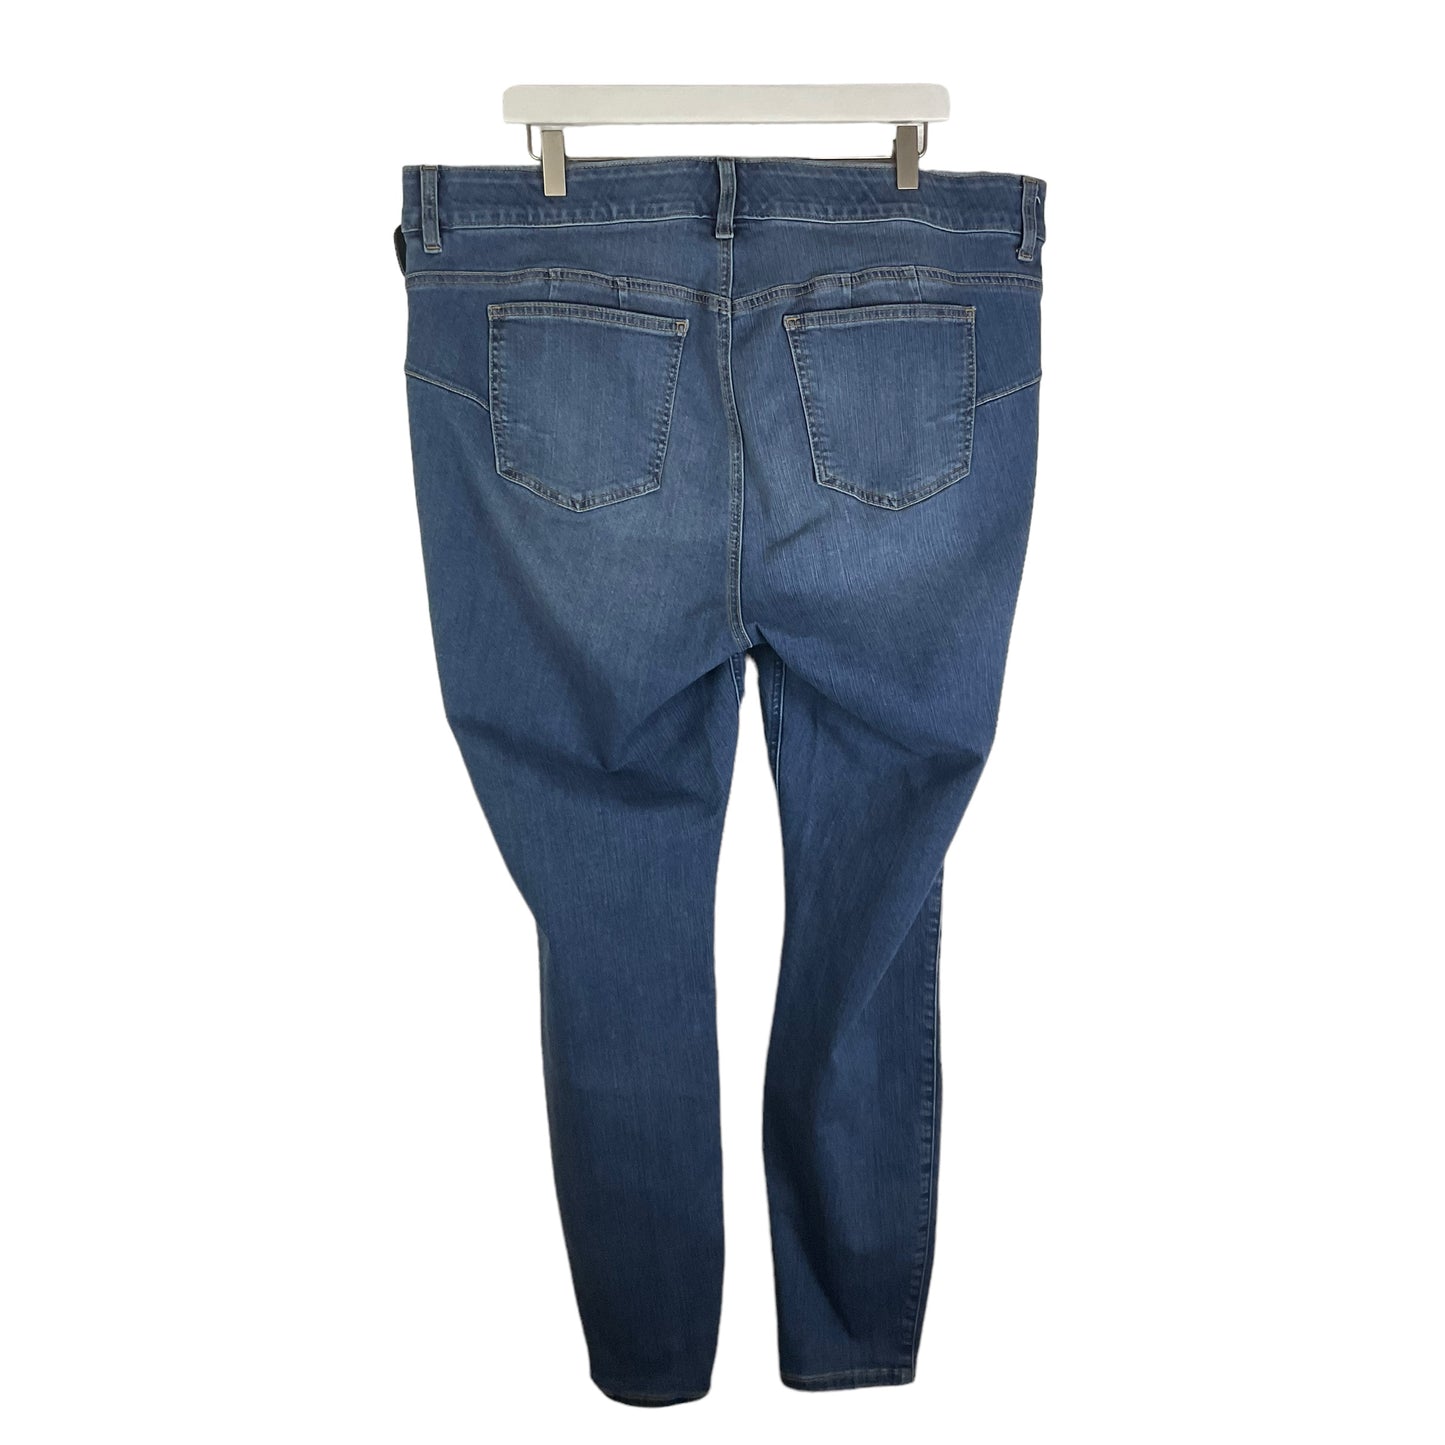 Jeans Skinny By Torrid  Size: 22